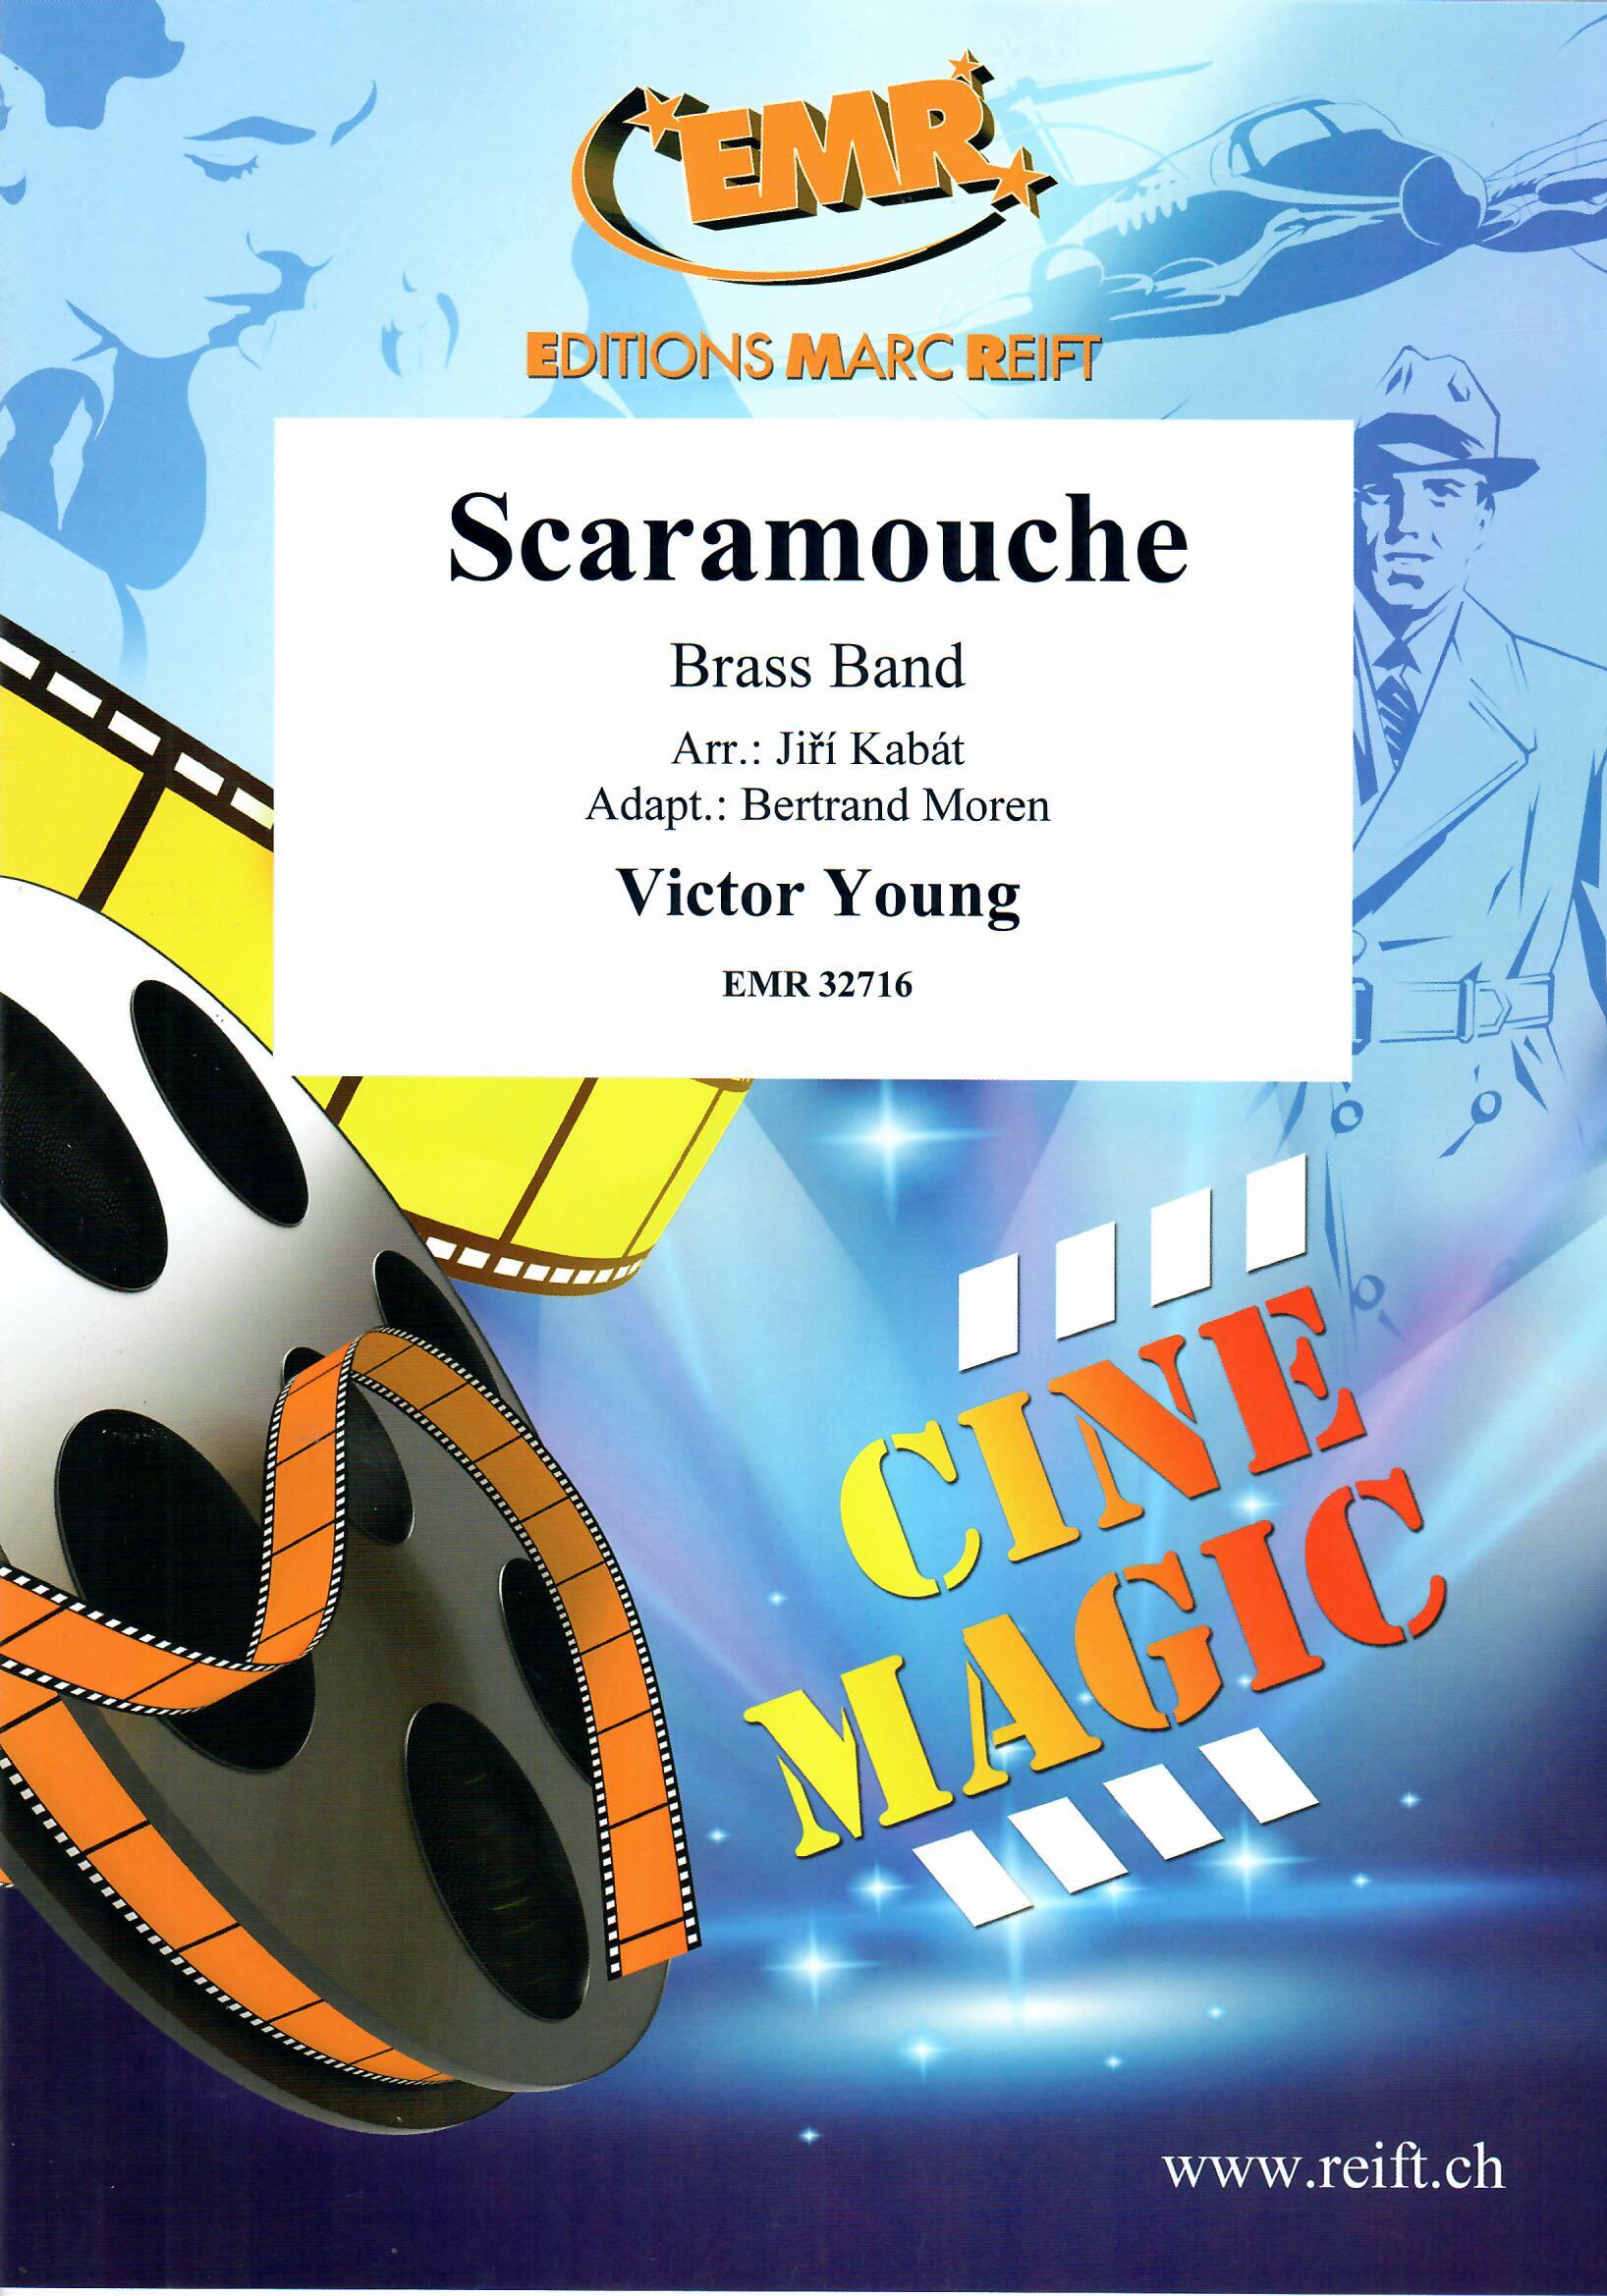 SCARAMOUCHE, NEW & RECENT Publications, FILM MUSIC & MUSICALS